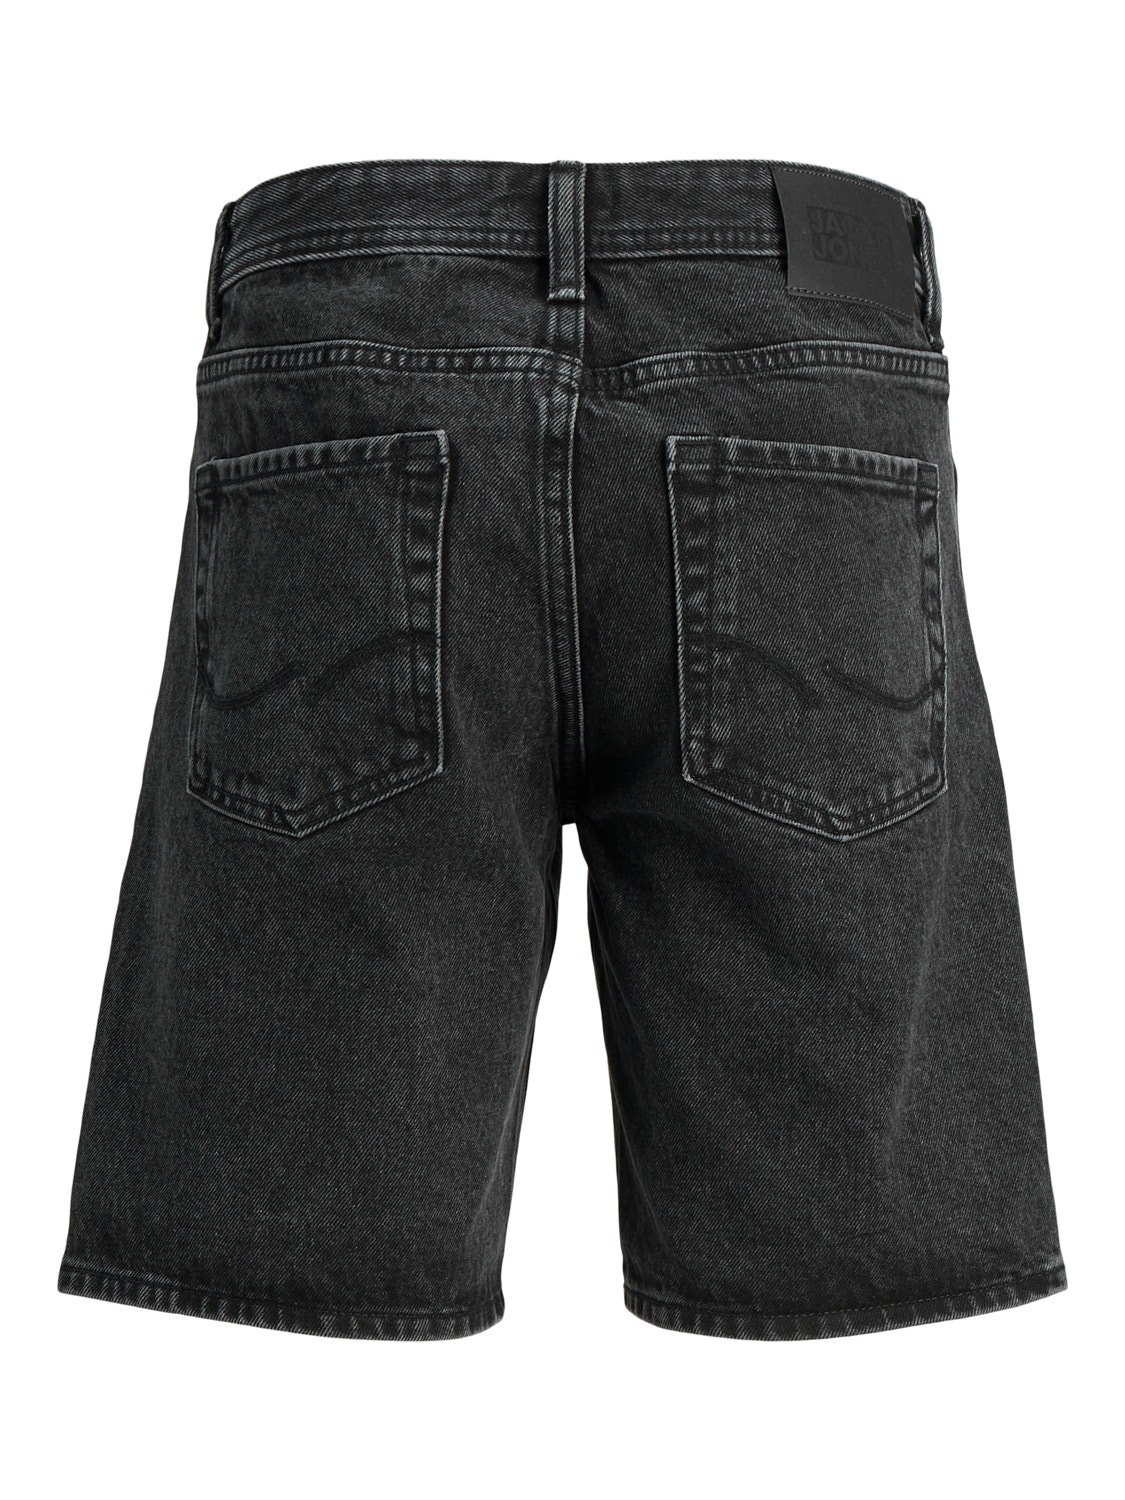 Jack & Jones Relaxed Fit Shorts de ajuste relajado Para chicos -Black Denim - 12250056